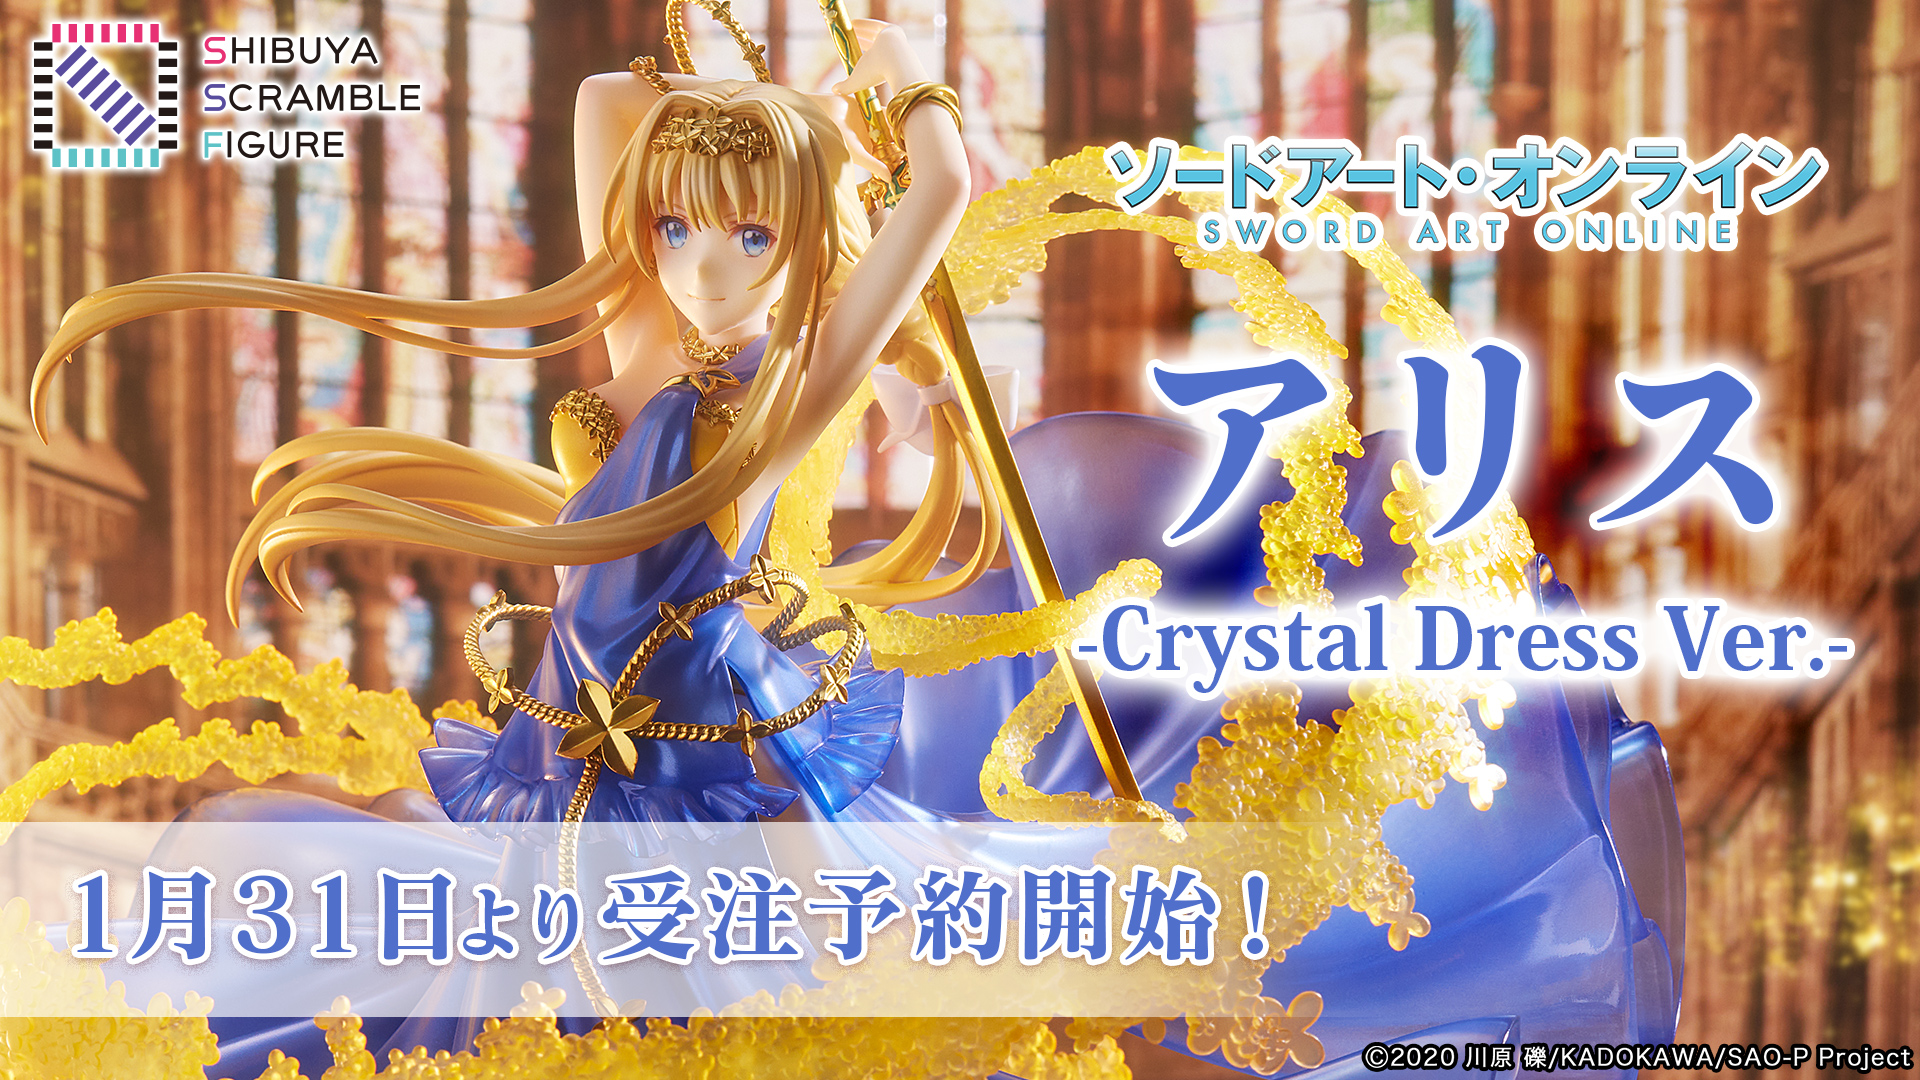 SHIBUYA SCRAMBLE FIGURE、『SAO』より、「アリス -Crystal Dress Ver 